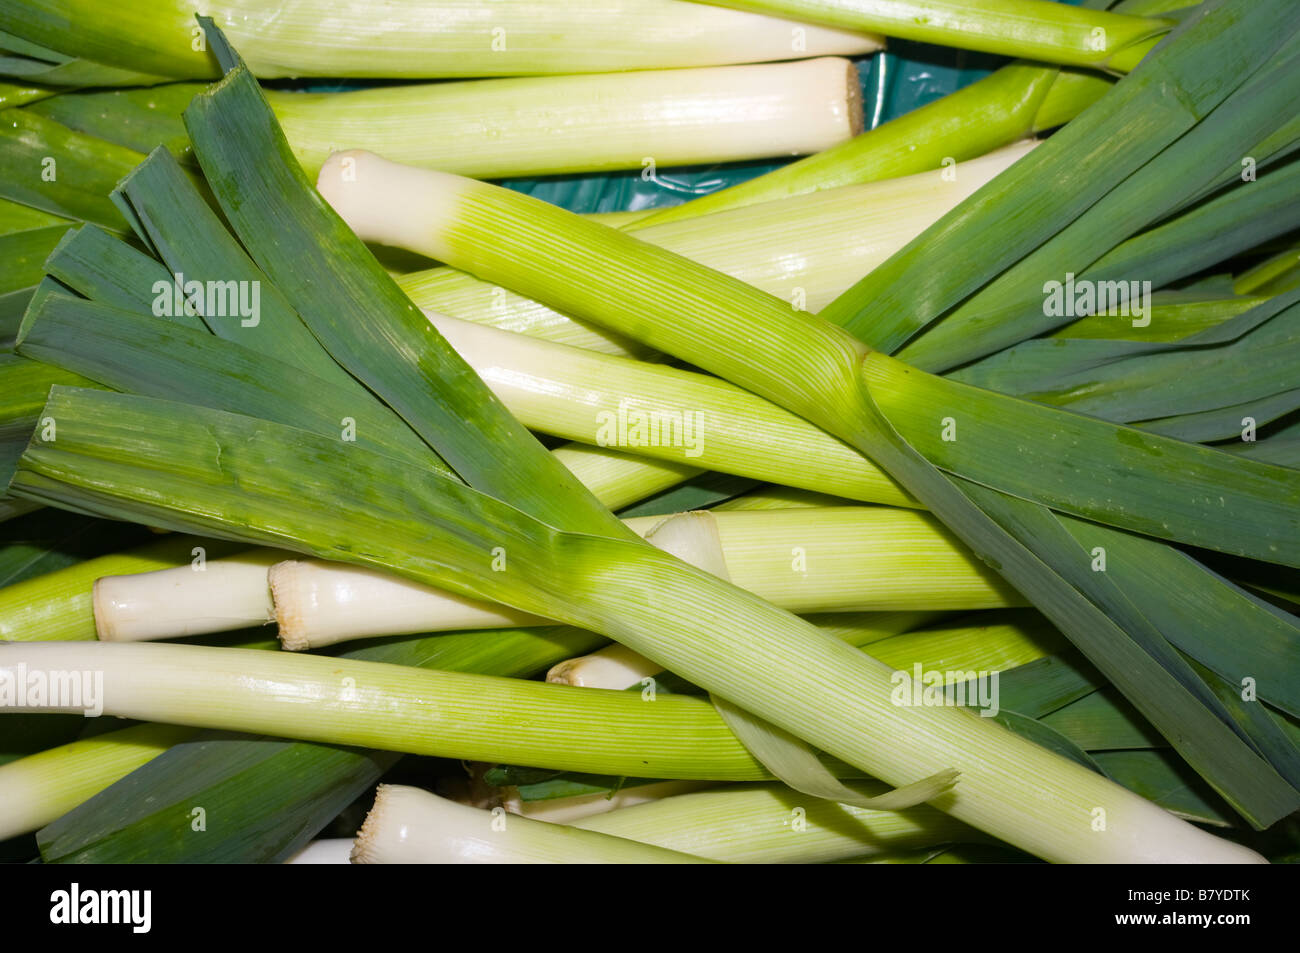 Rohe frischem Lauch grün Frühling Gemüse Gemüse Stockfotografie - Alamy